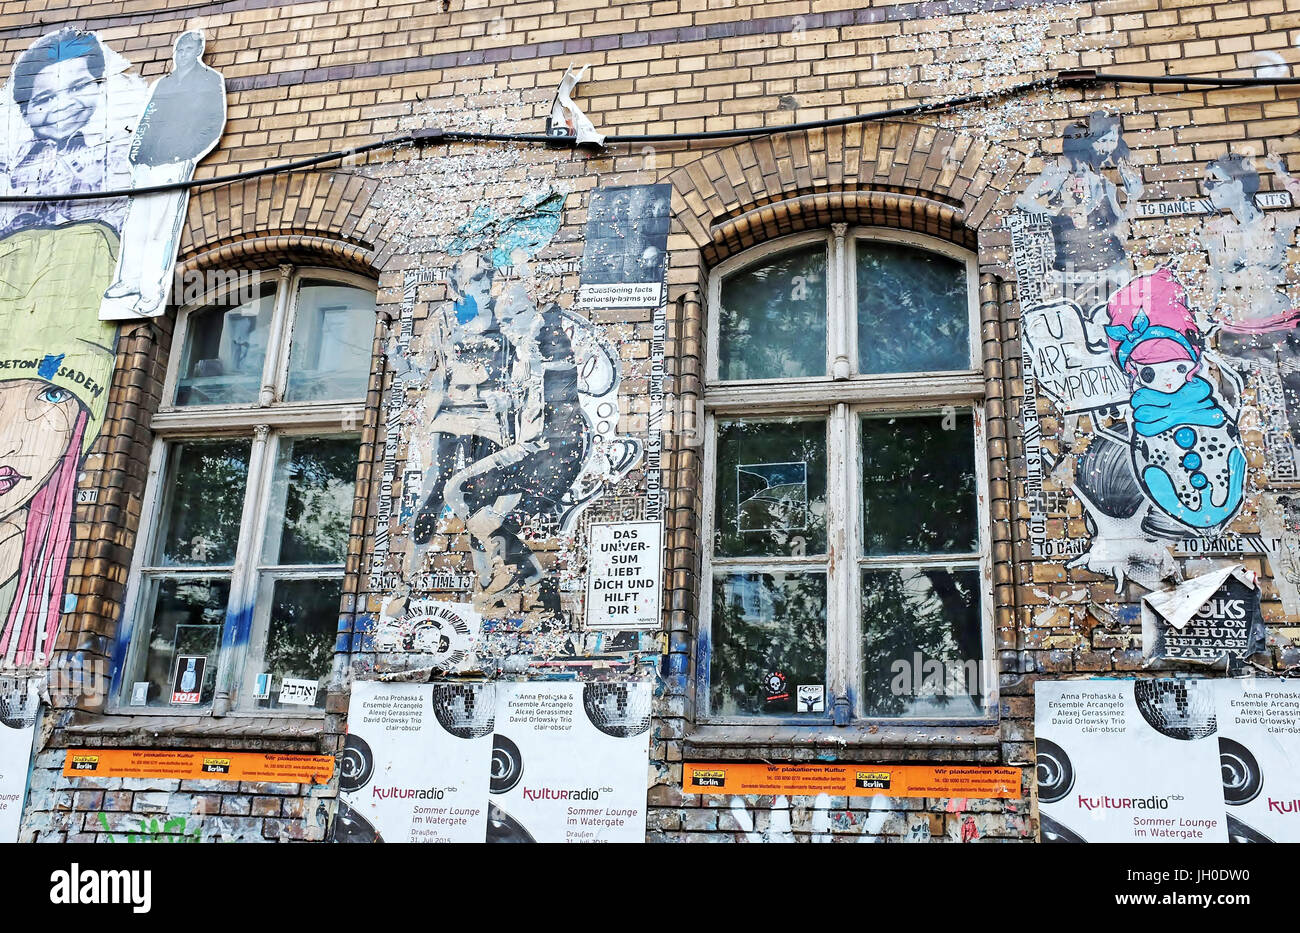 Graffiti art displayed on a brick building in the Kreuzberg neighborhood of Berlin, Germany channels social commentary via street art. Stock Photo